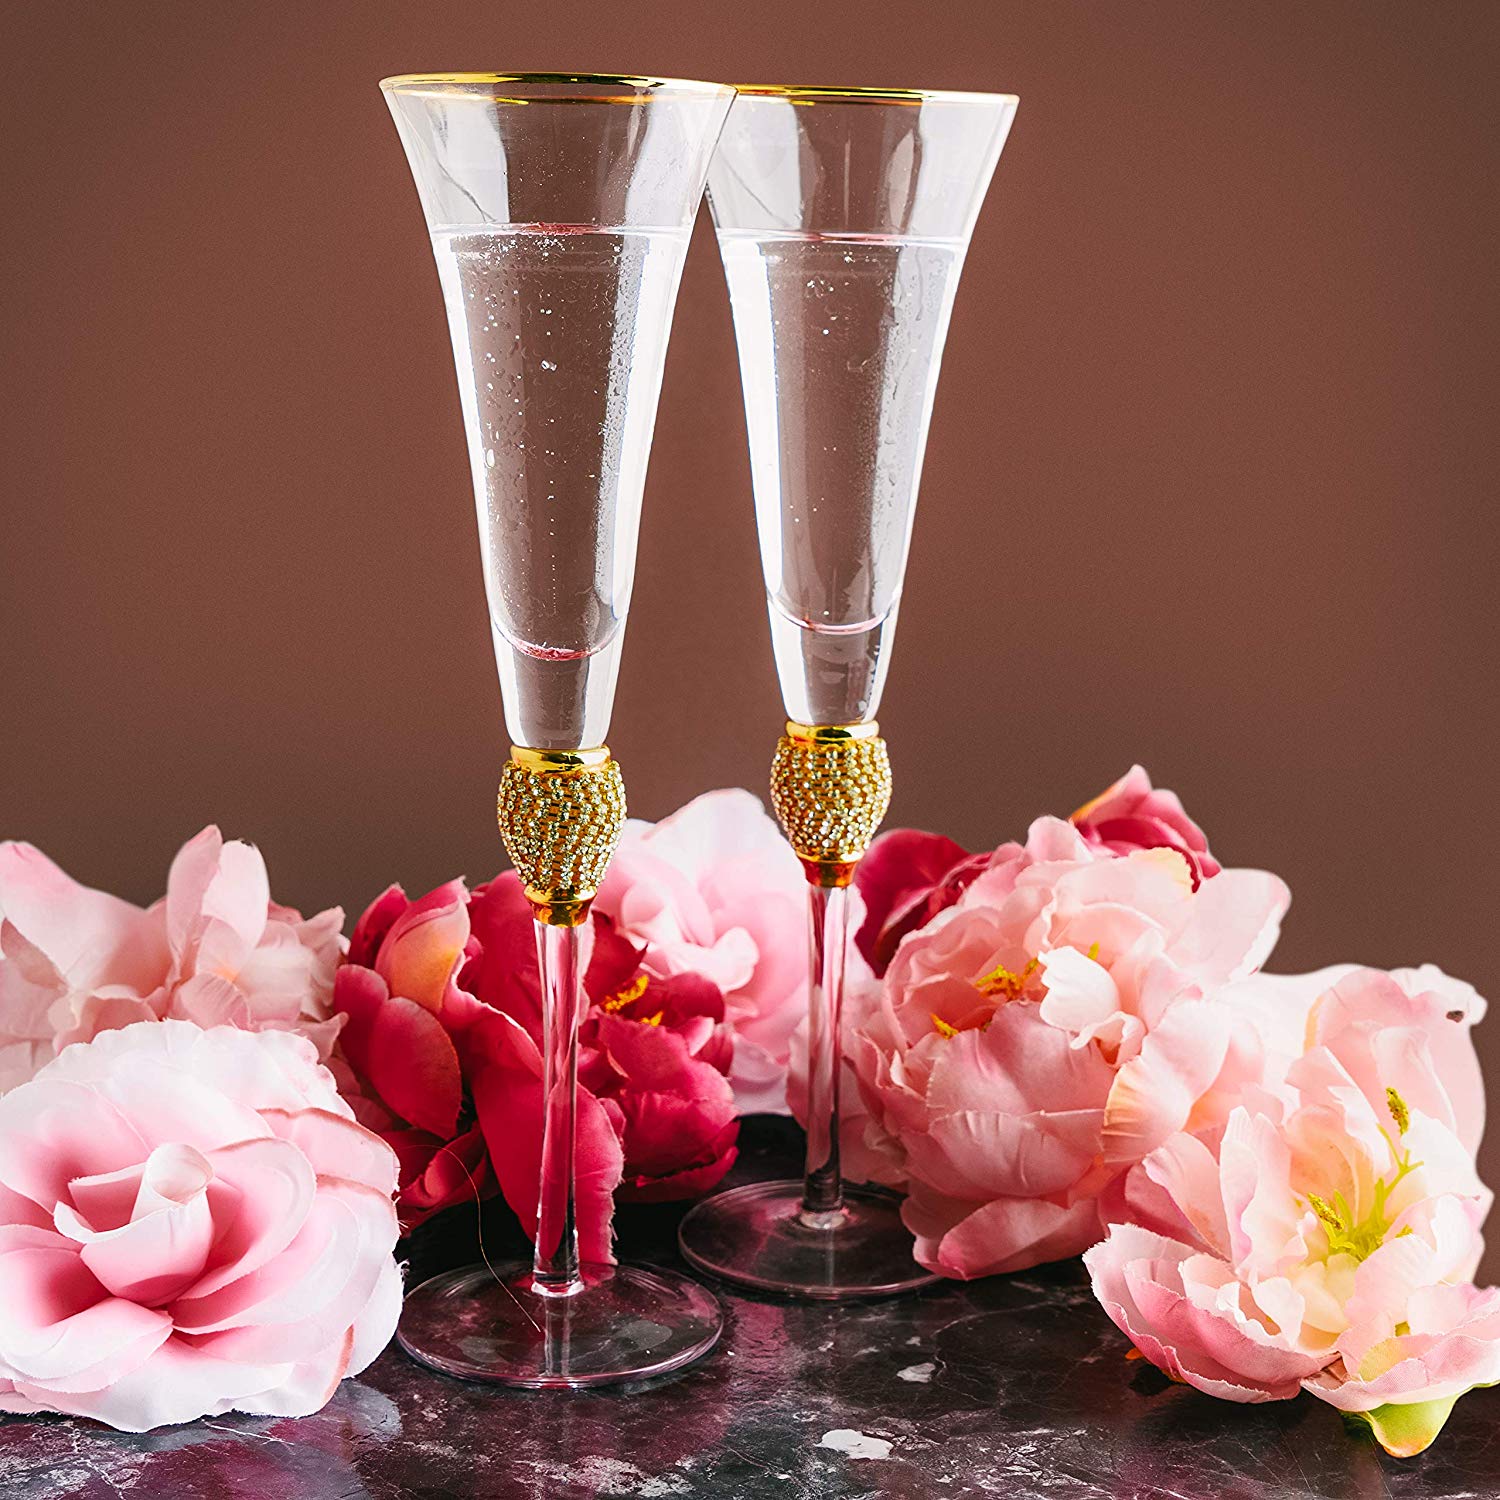 The Wine Savant Champagne Flutes Glasses Set of 4 - Luster